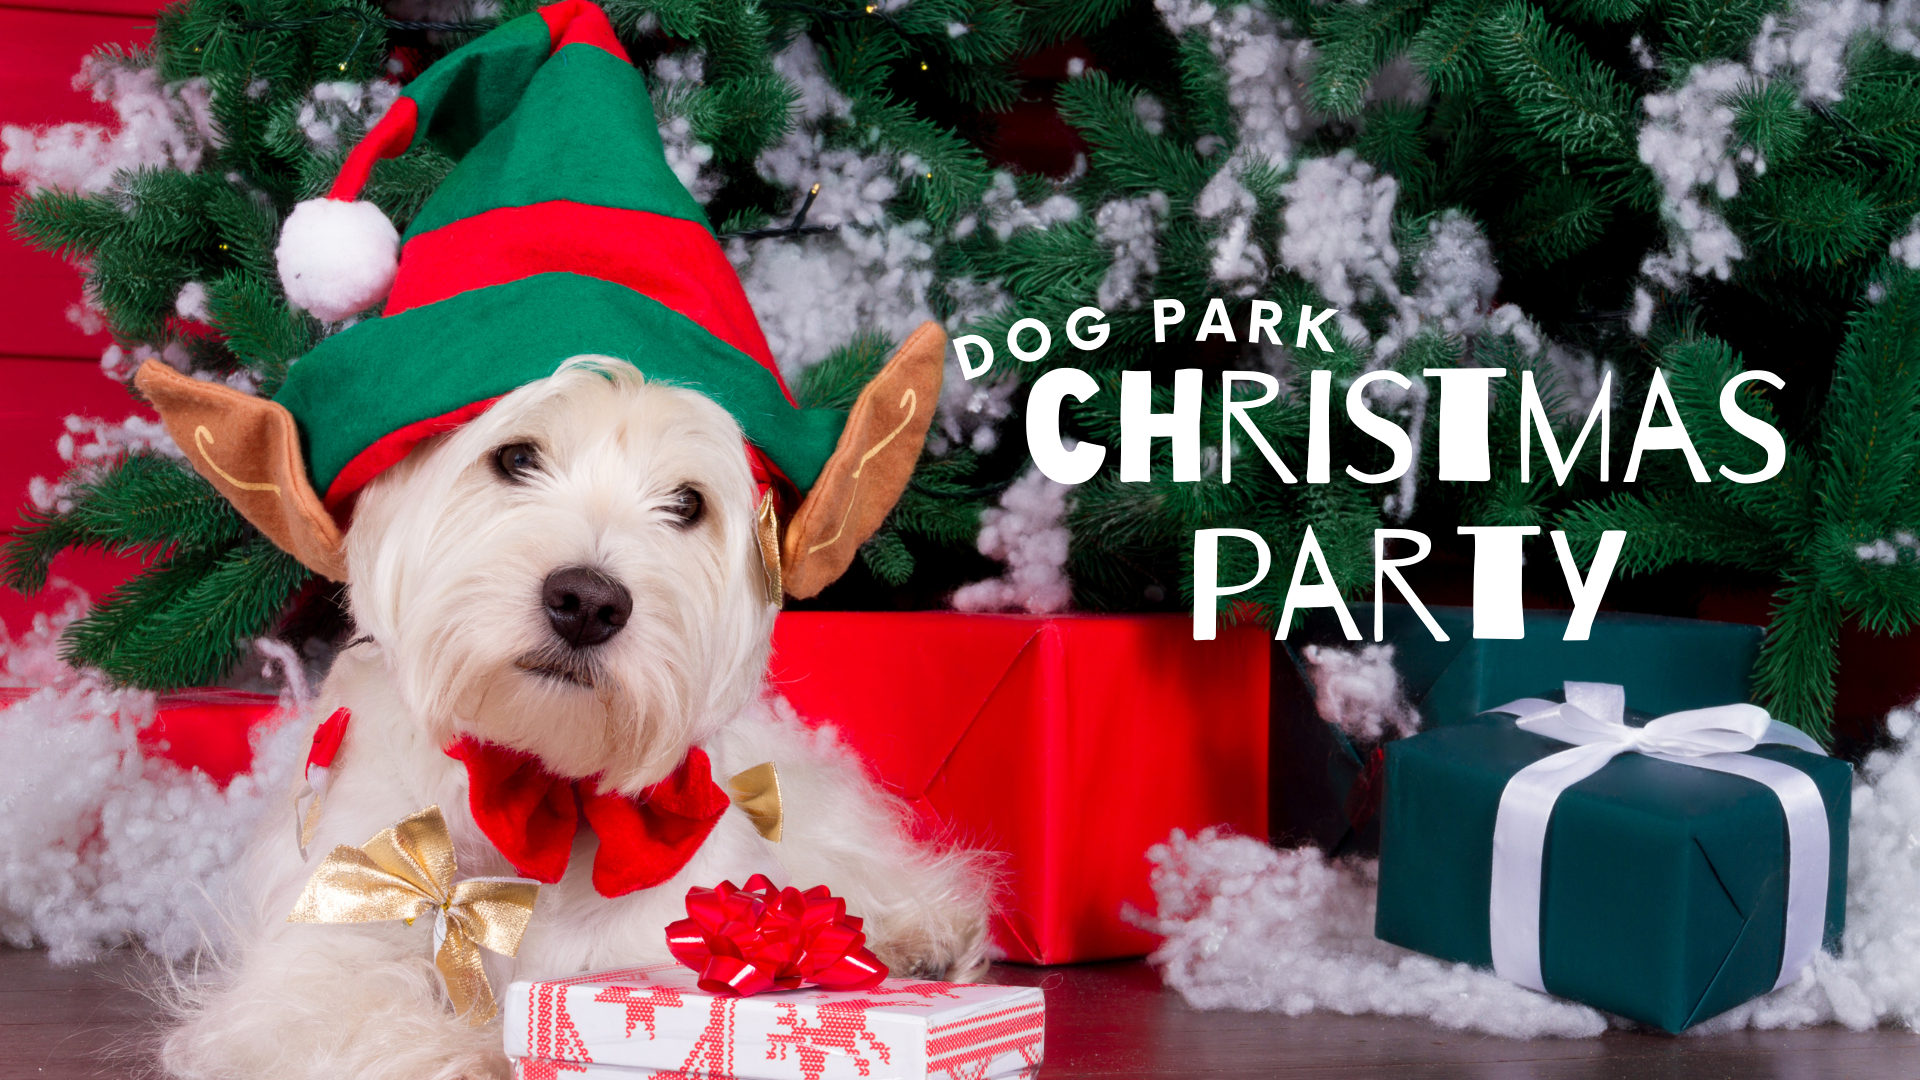 Dog Park Christmas Party with Santa